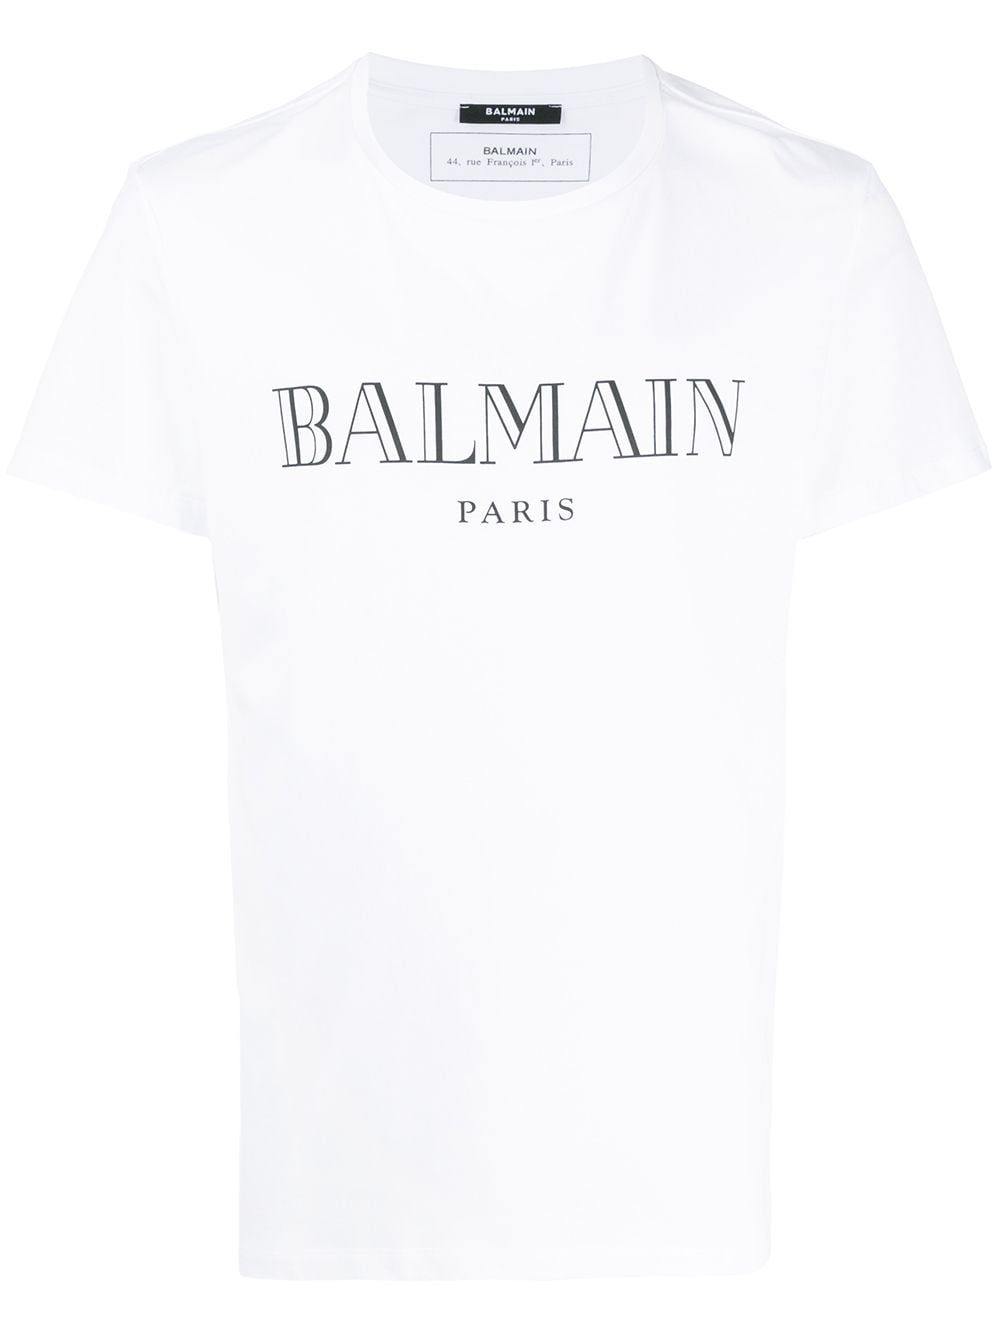 White Cotton T-Shirt With Black Balmain Paris Logo Print - Centurion Clothing